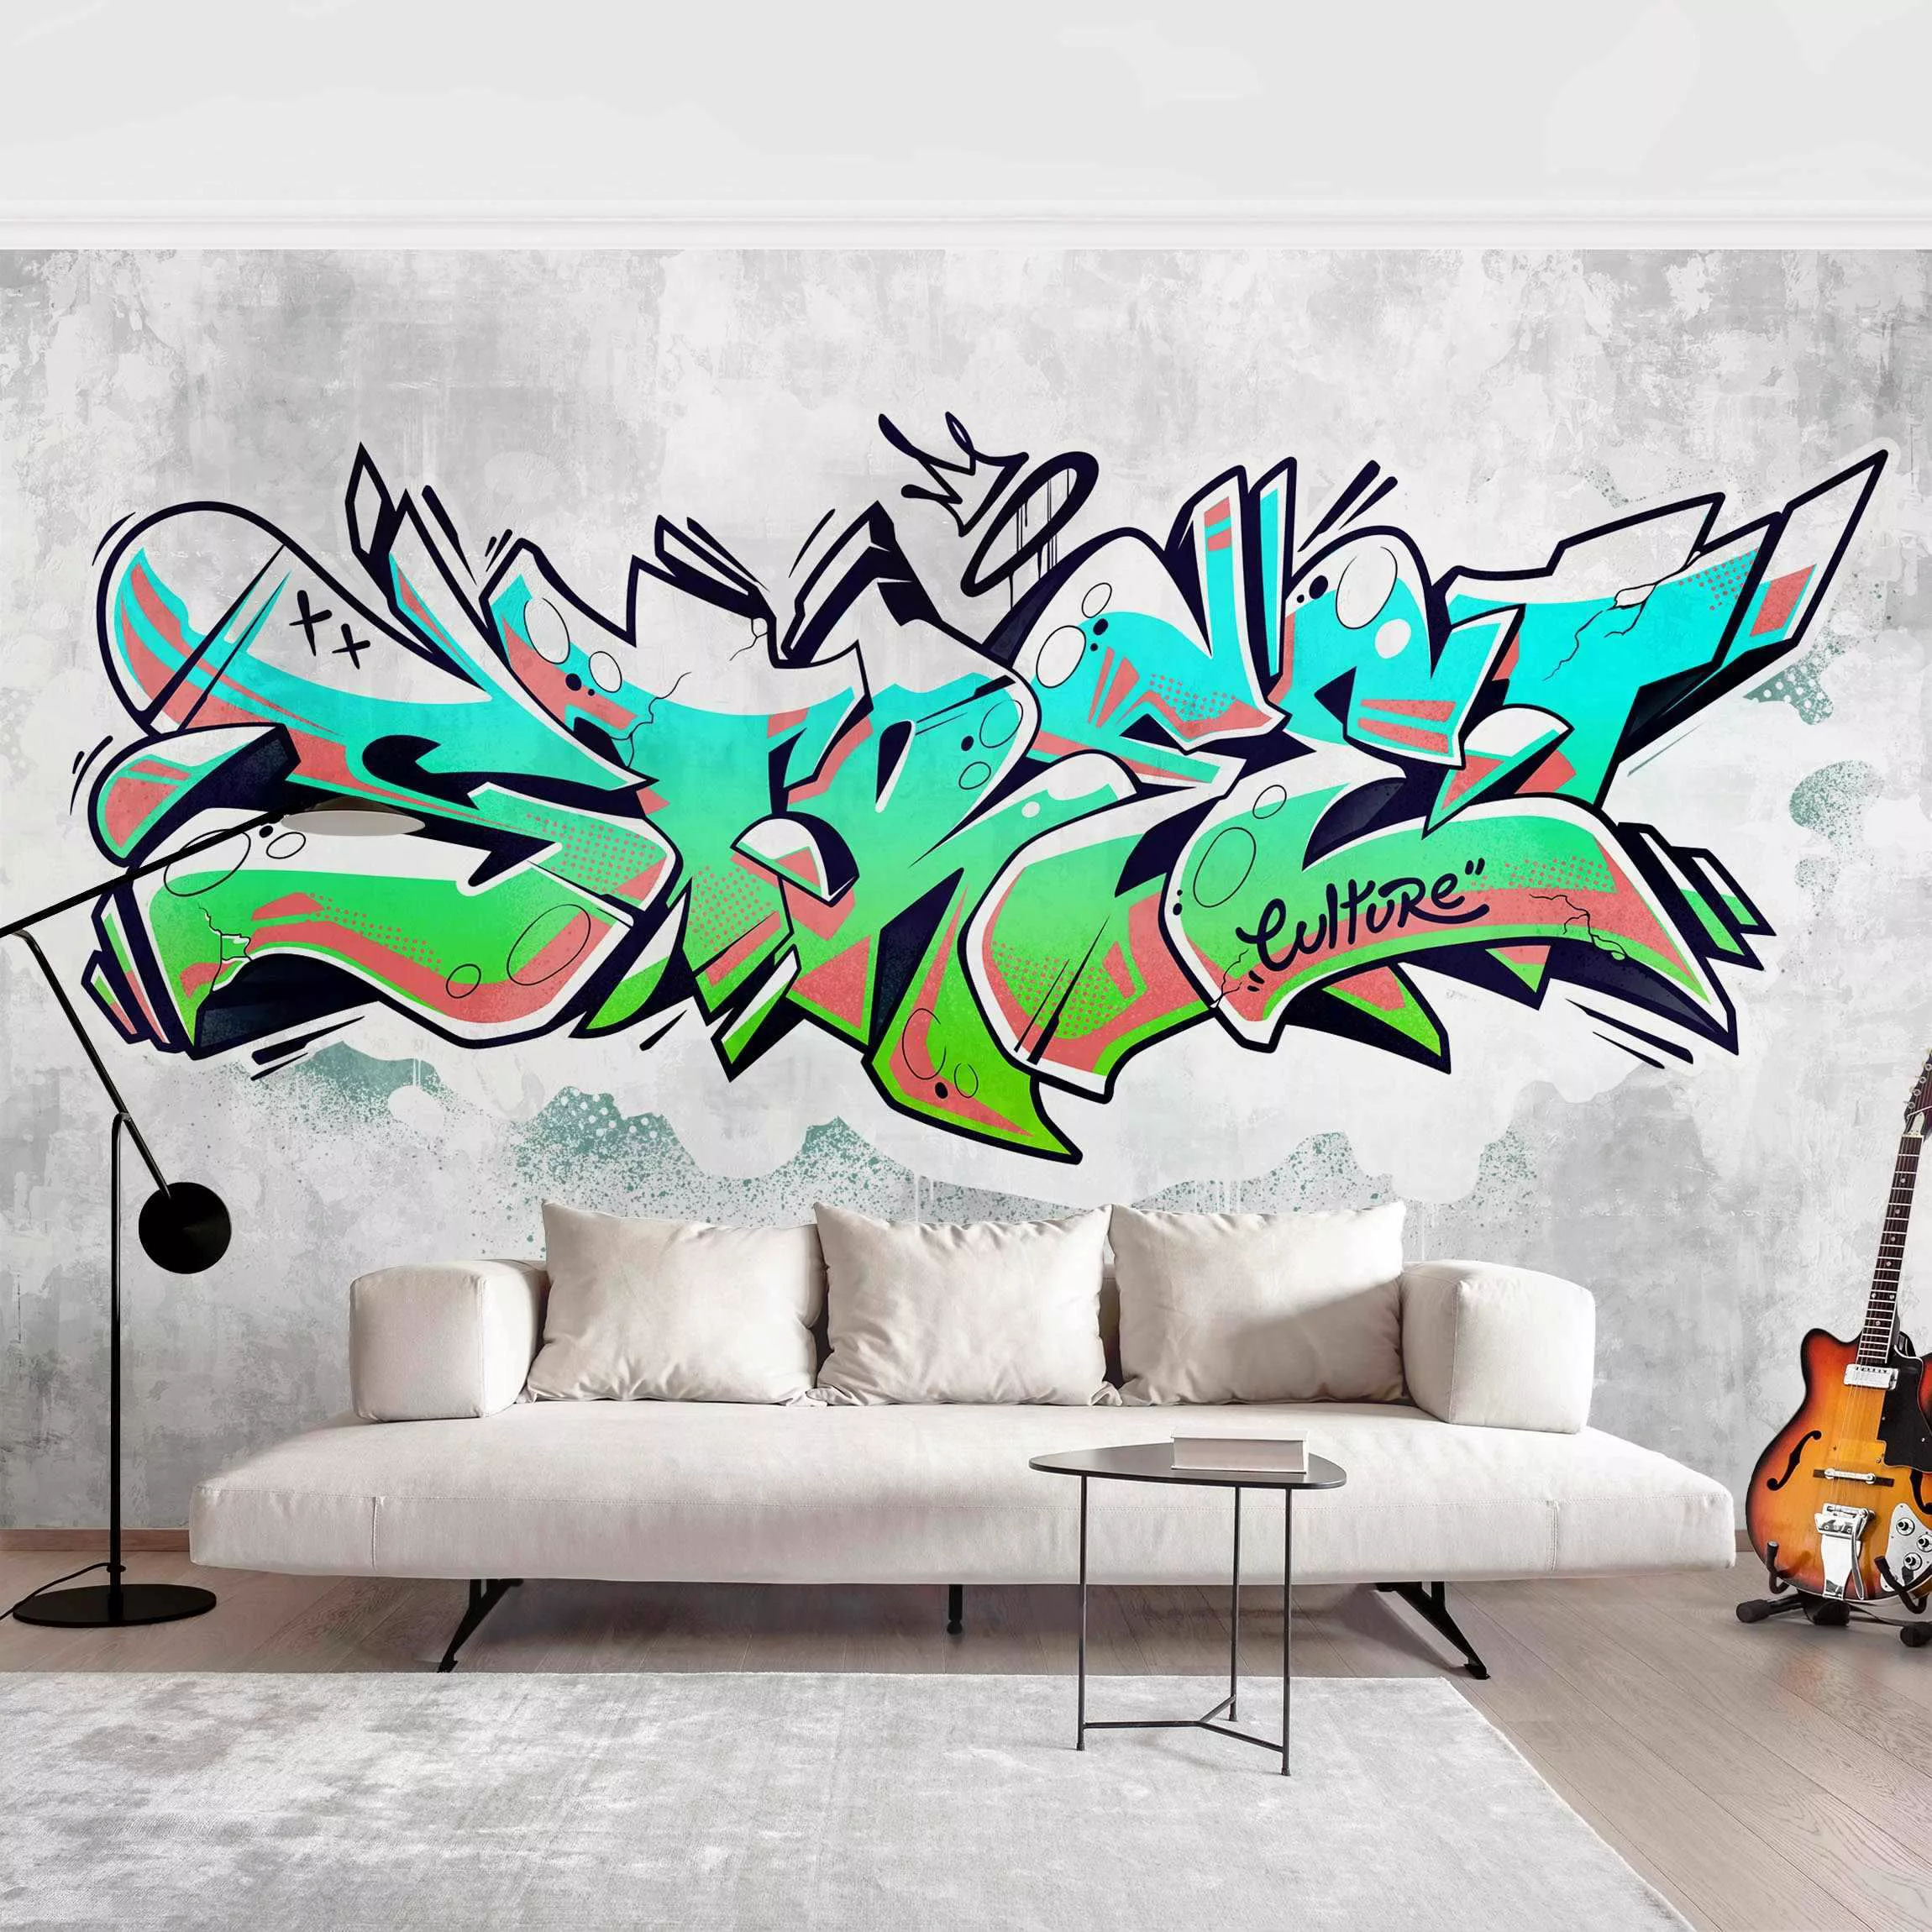 Fototapete Graffiti Art Street Culture günstig online kaufen